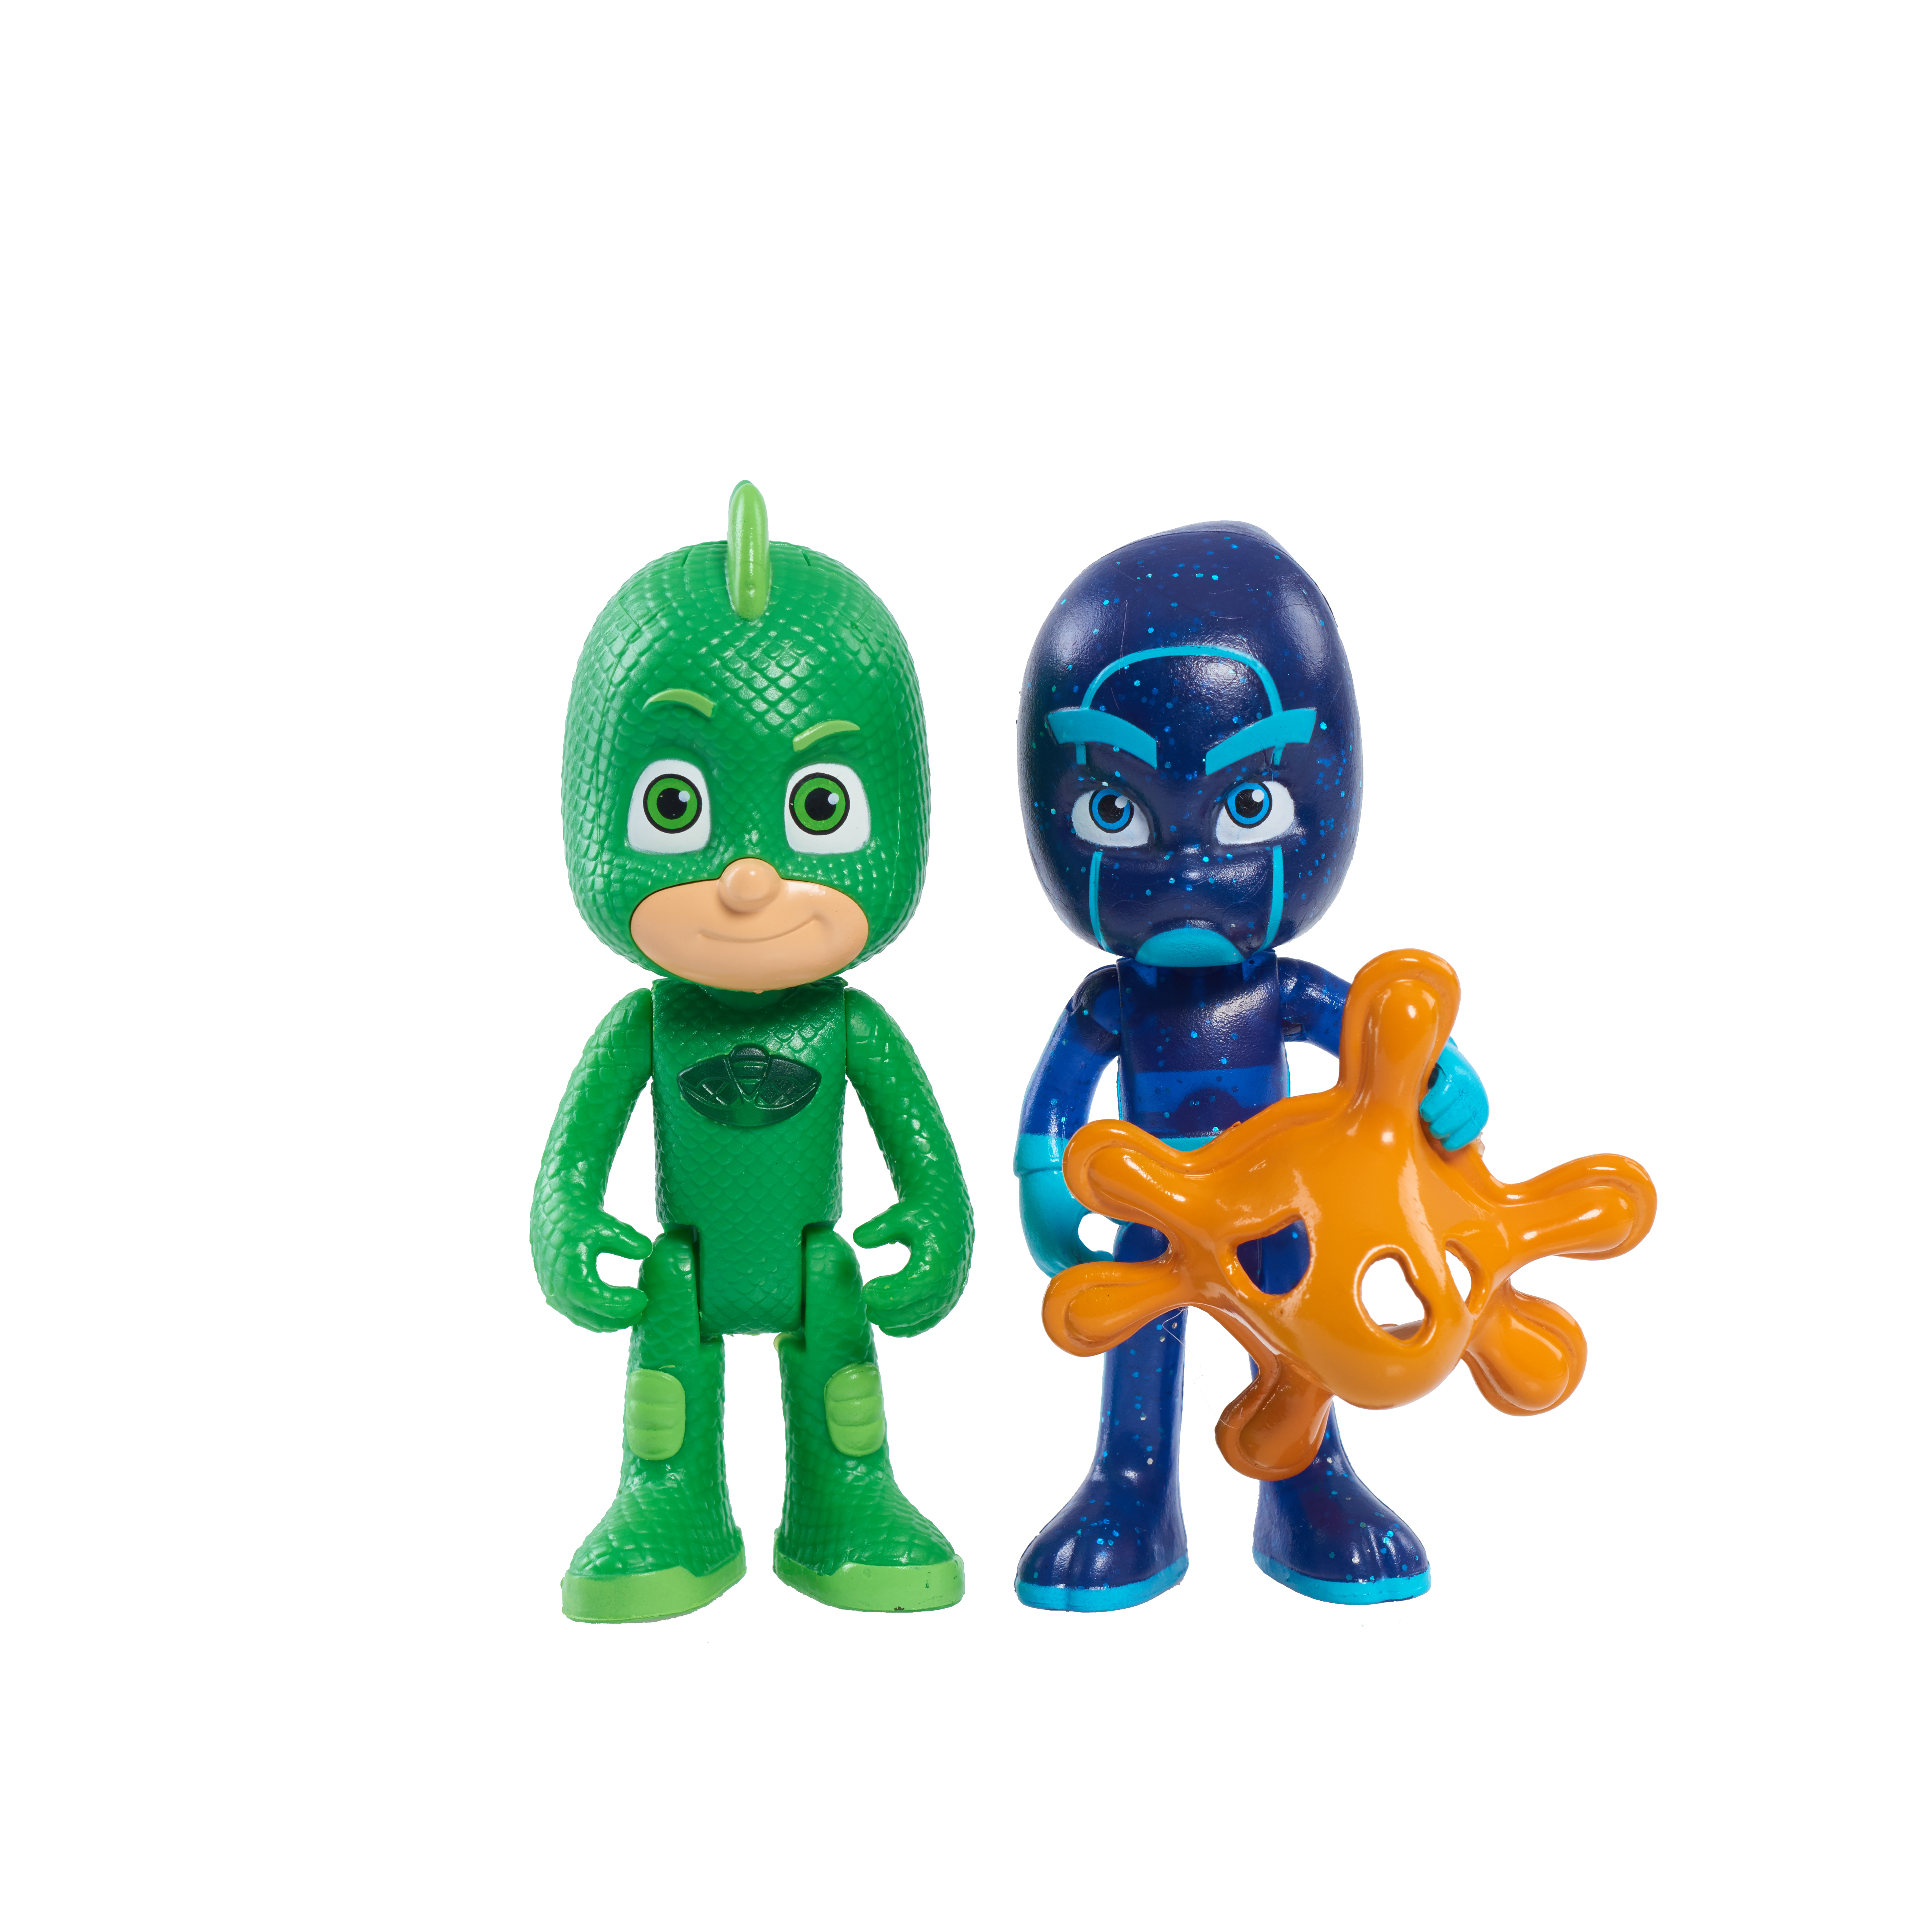 PJ Masks Duet Figure Pack: Light Up Hero vs. Basic Villain-Gekko vs. Night Ninja - image 2 of 2